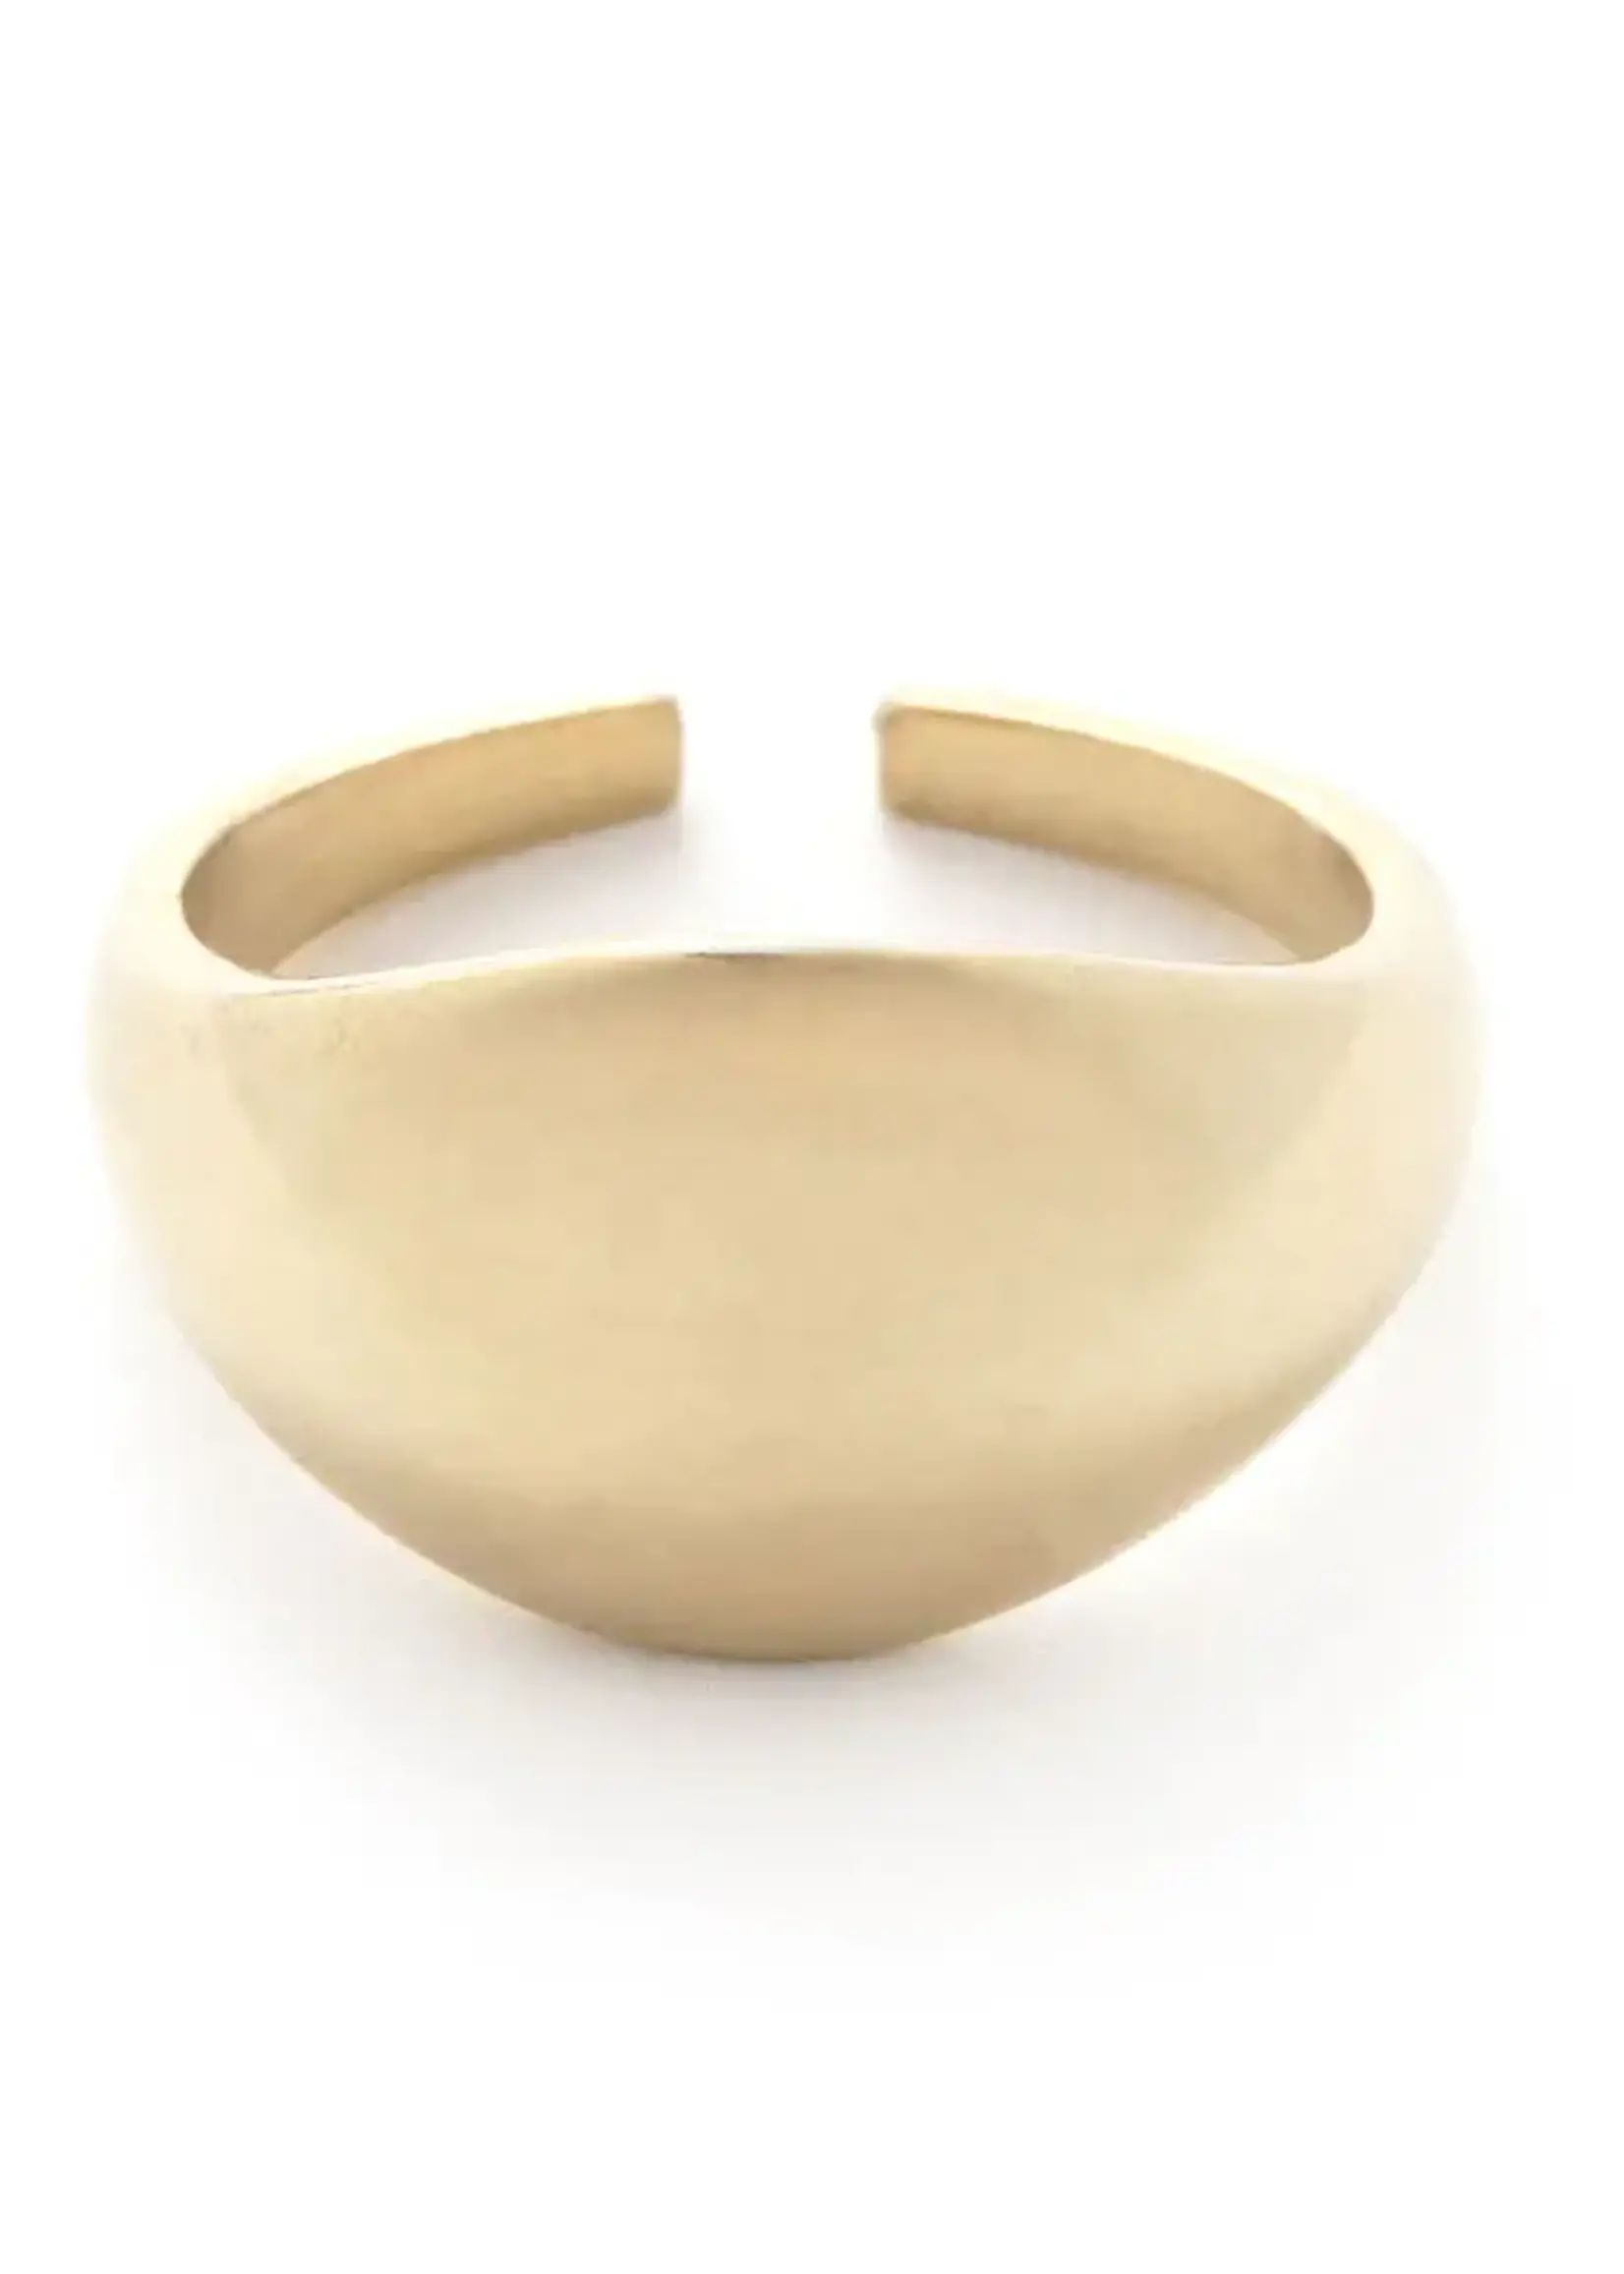 AMANO studio Domed Brass Signet Ring